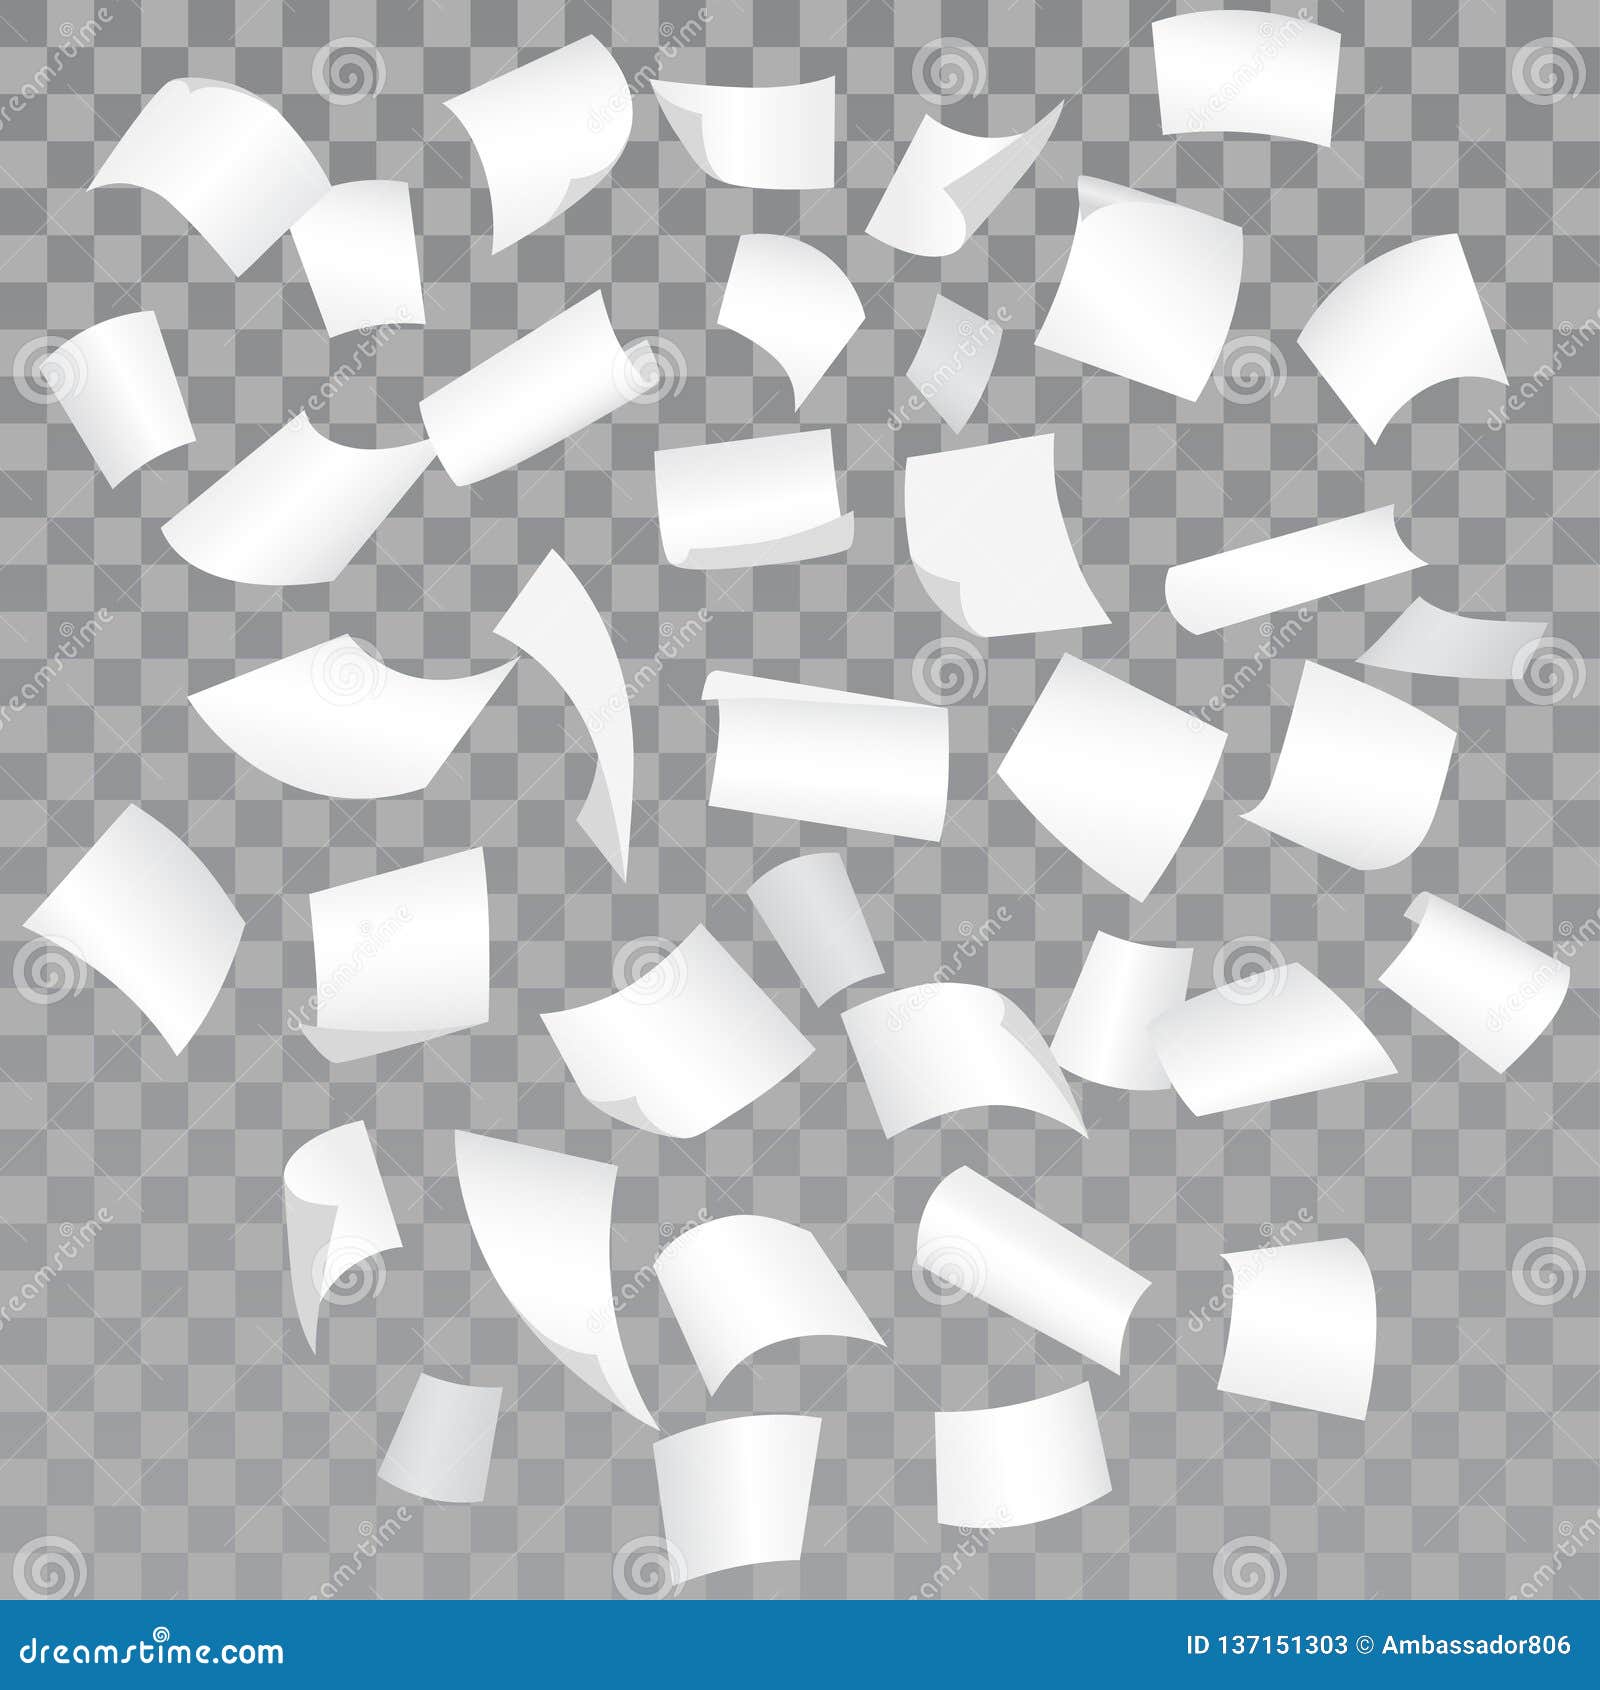 falling-paper-sheets-logo-vector-illustration-cartoondealer